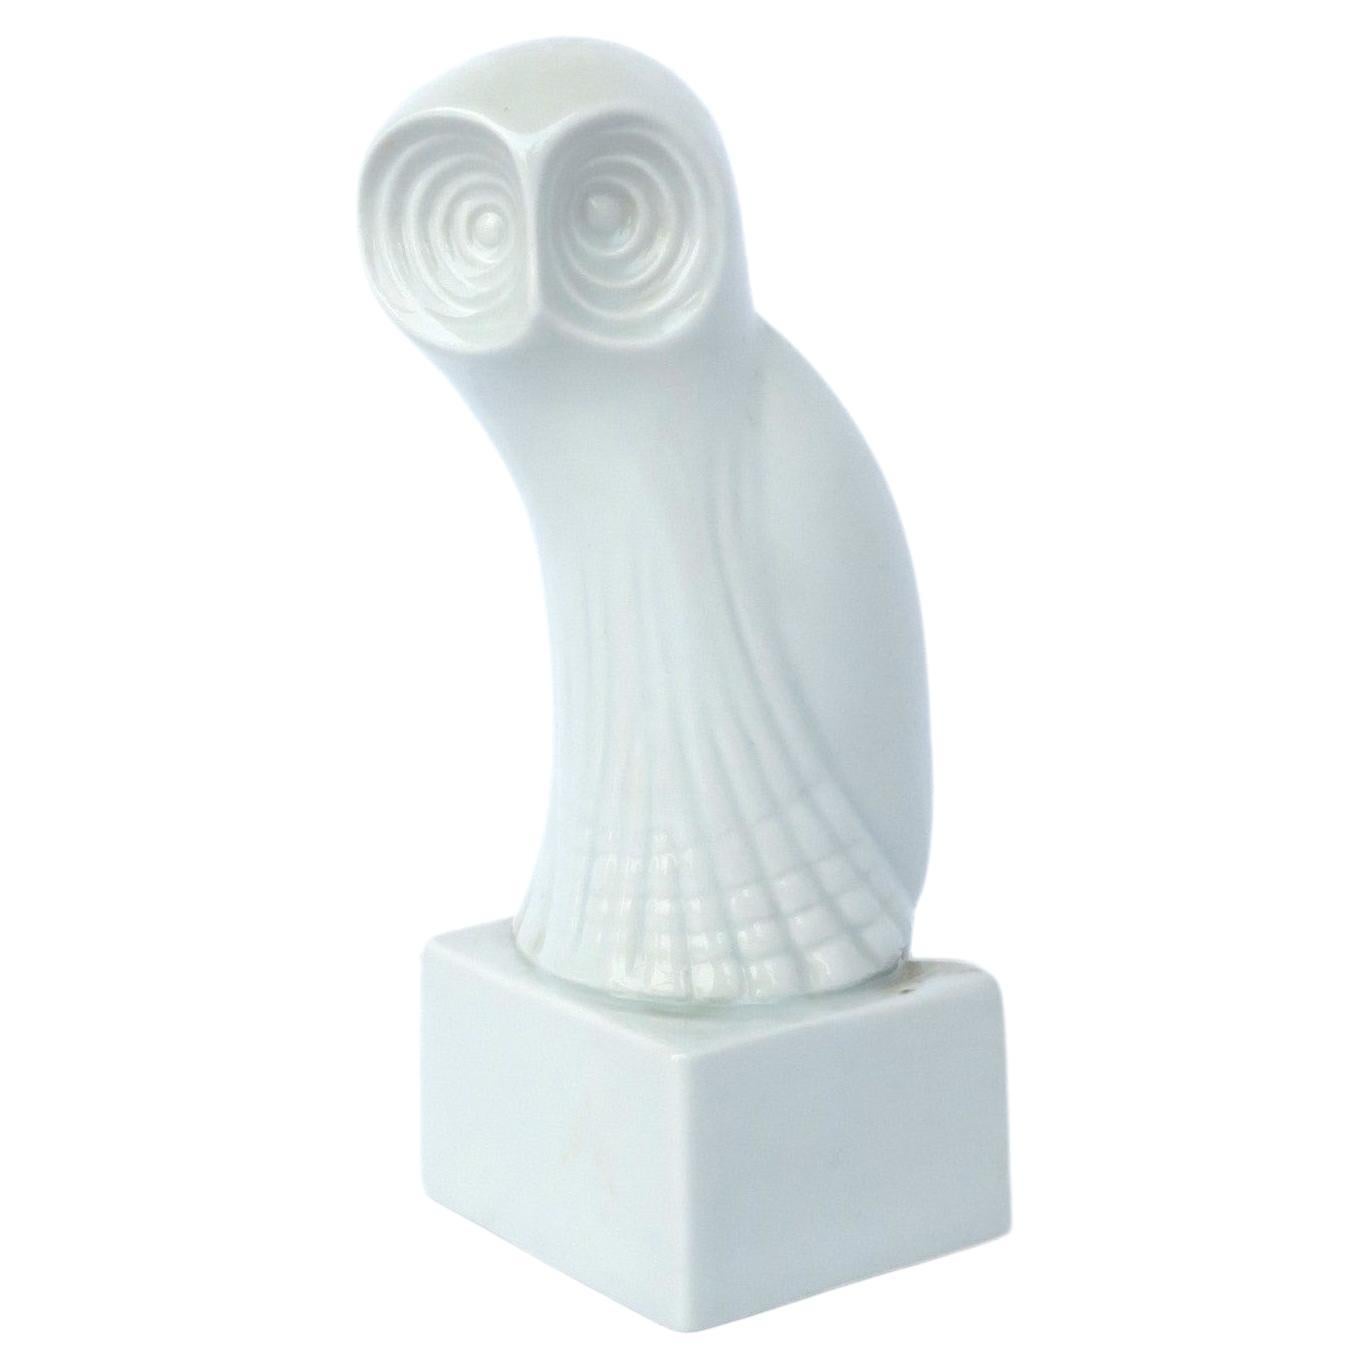 Escultura objeto de porcelana de pájaro búho blanco